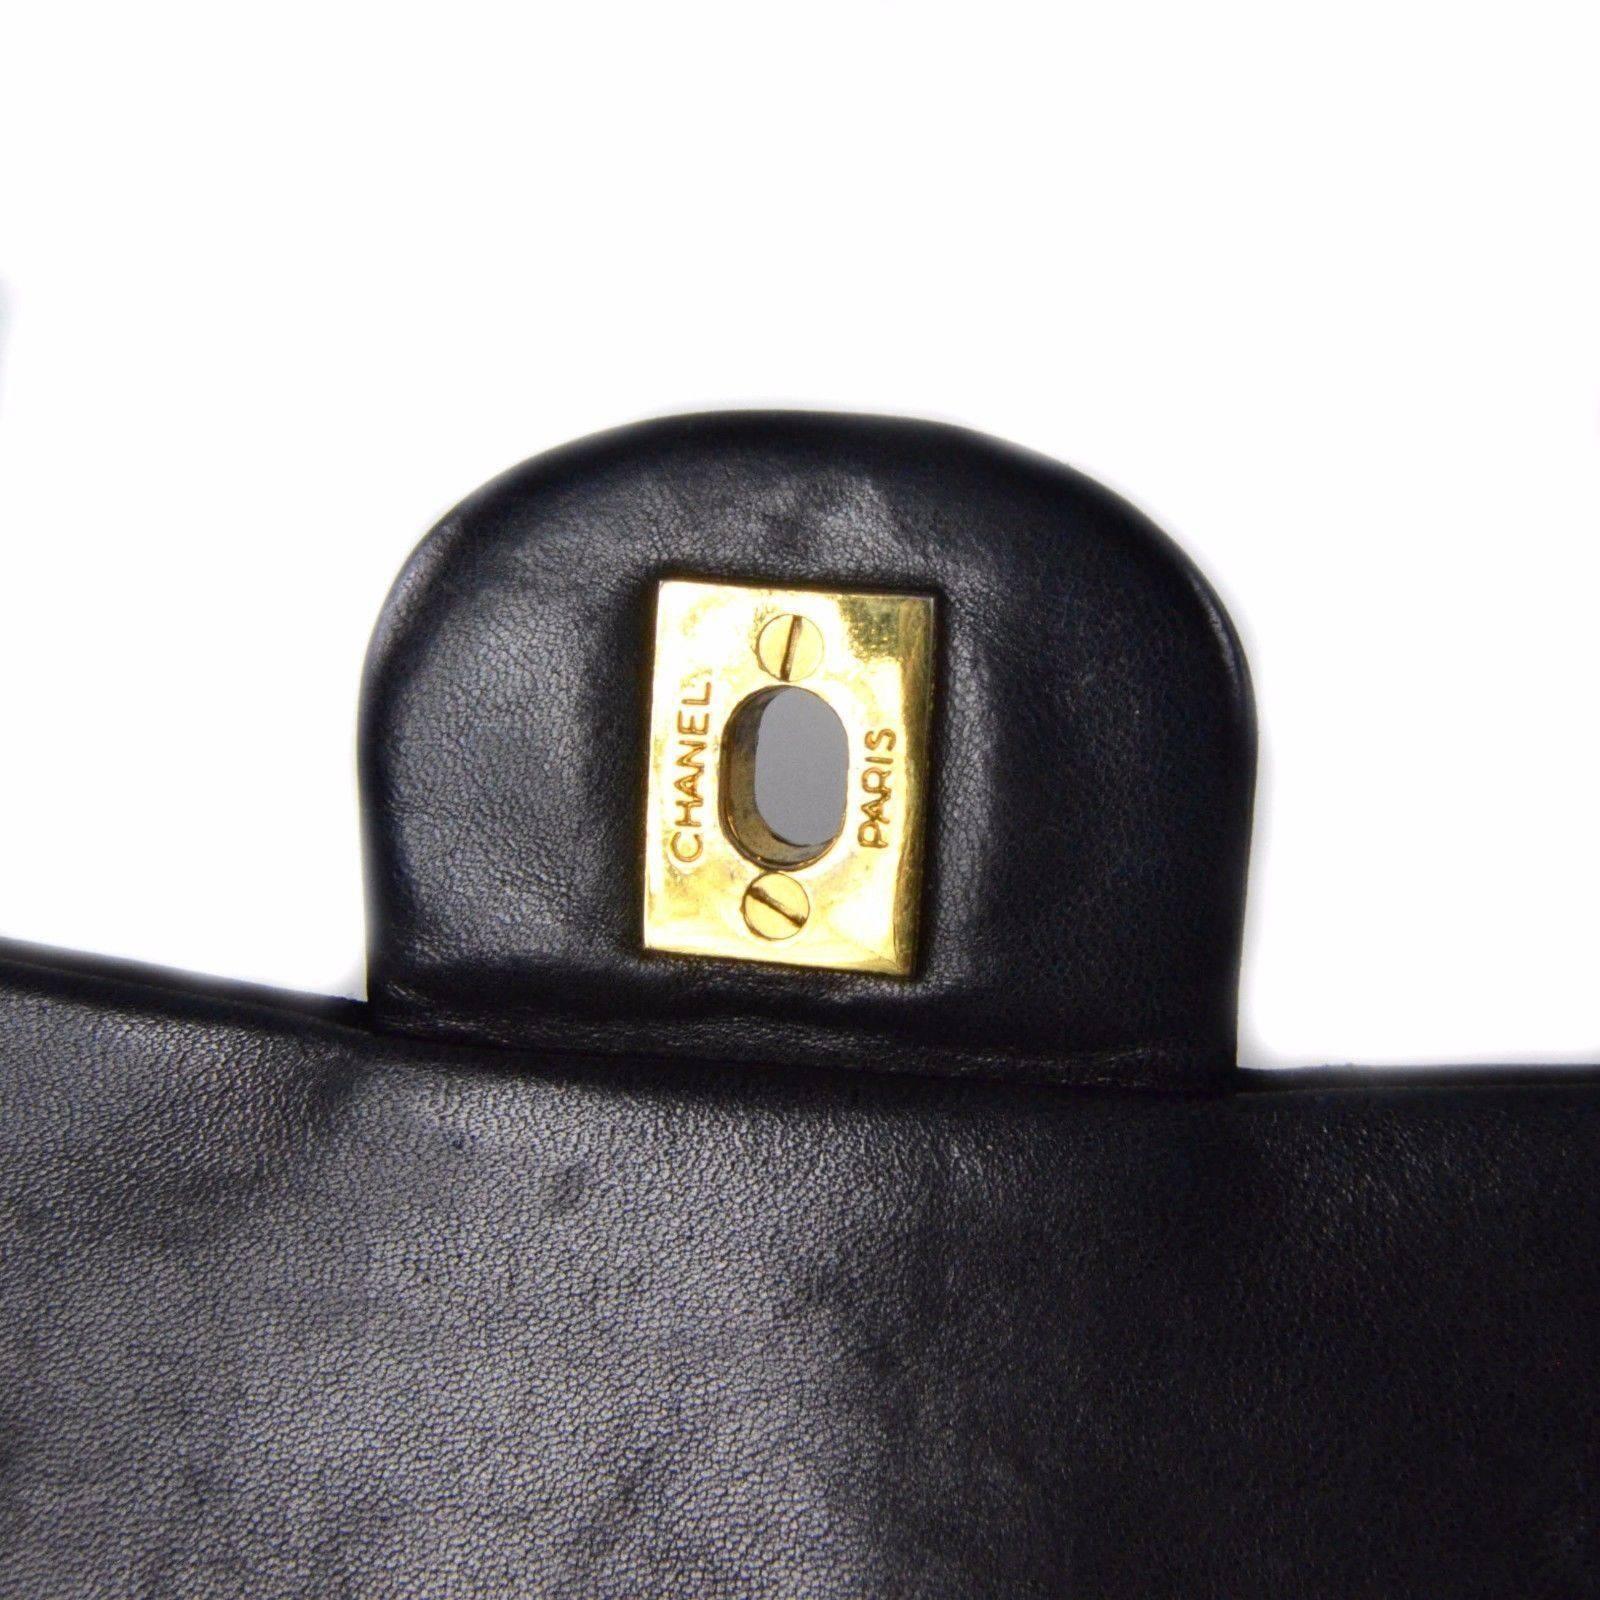 Chanel Medium Black Leather Bag - Quilted Double Flap CC Gold Shoulder Handbag 3